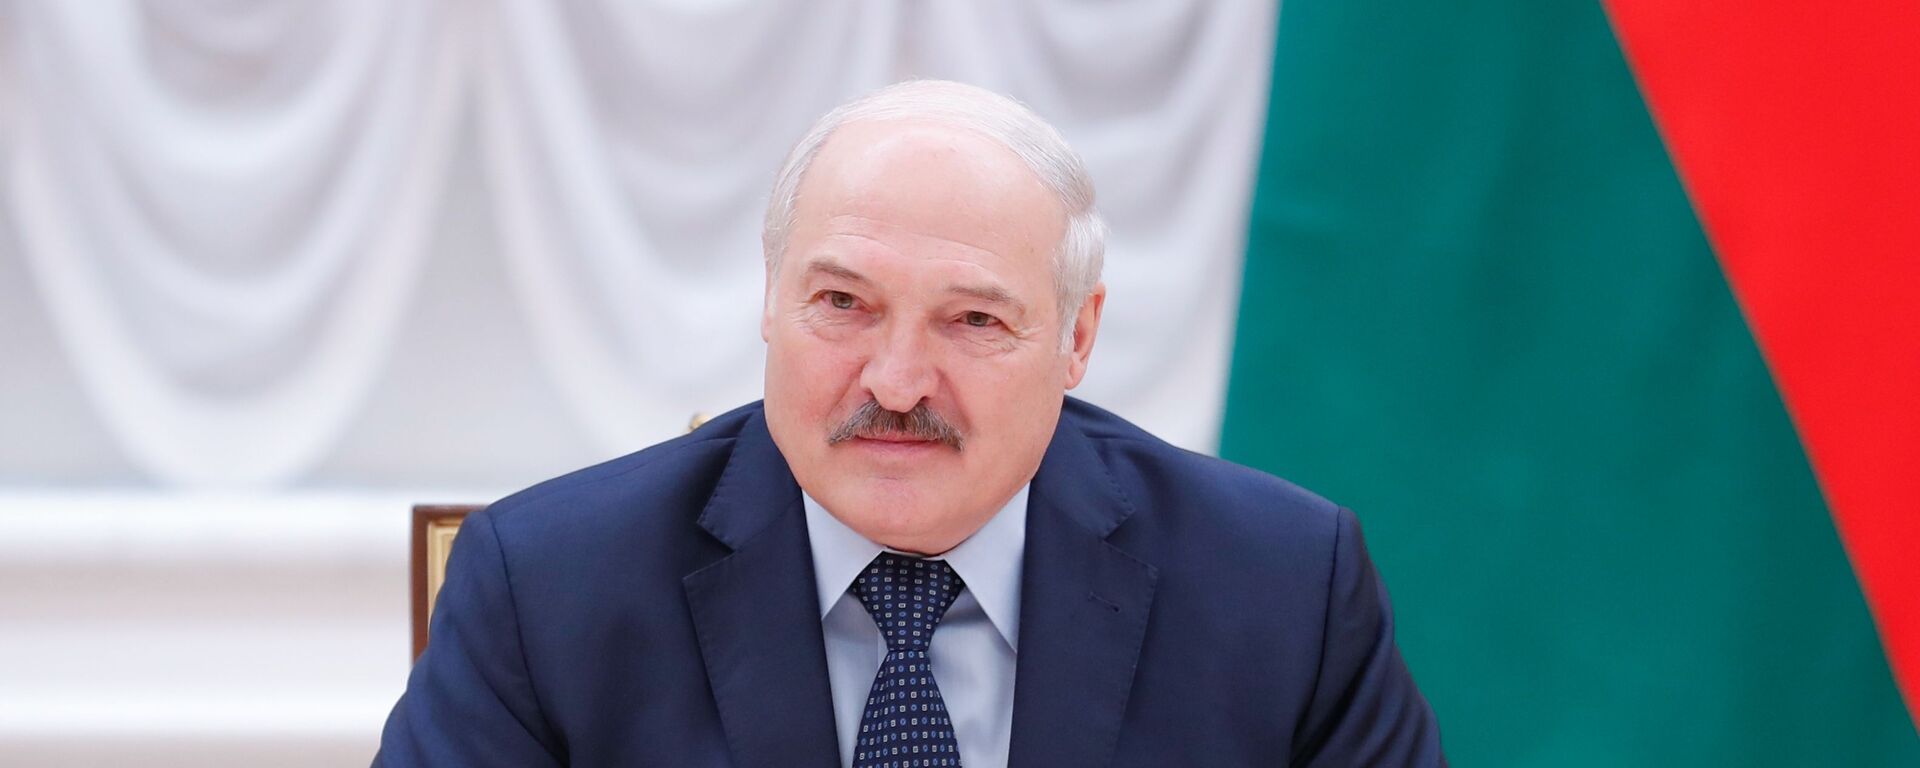 Президент Белоруссии Александр Лукашенко - Sputnik Latvija, 1920, 17.09.2021